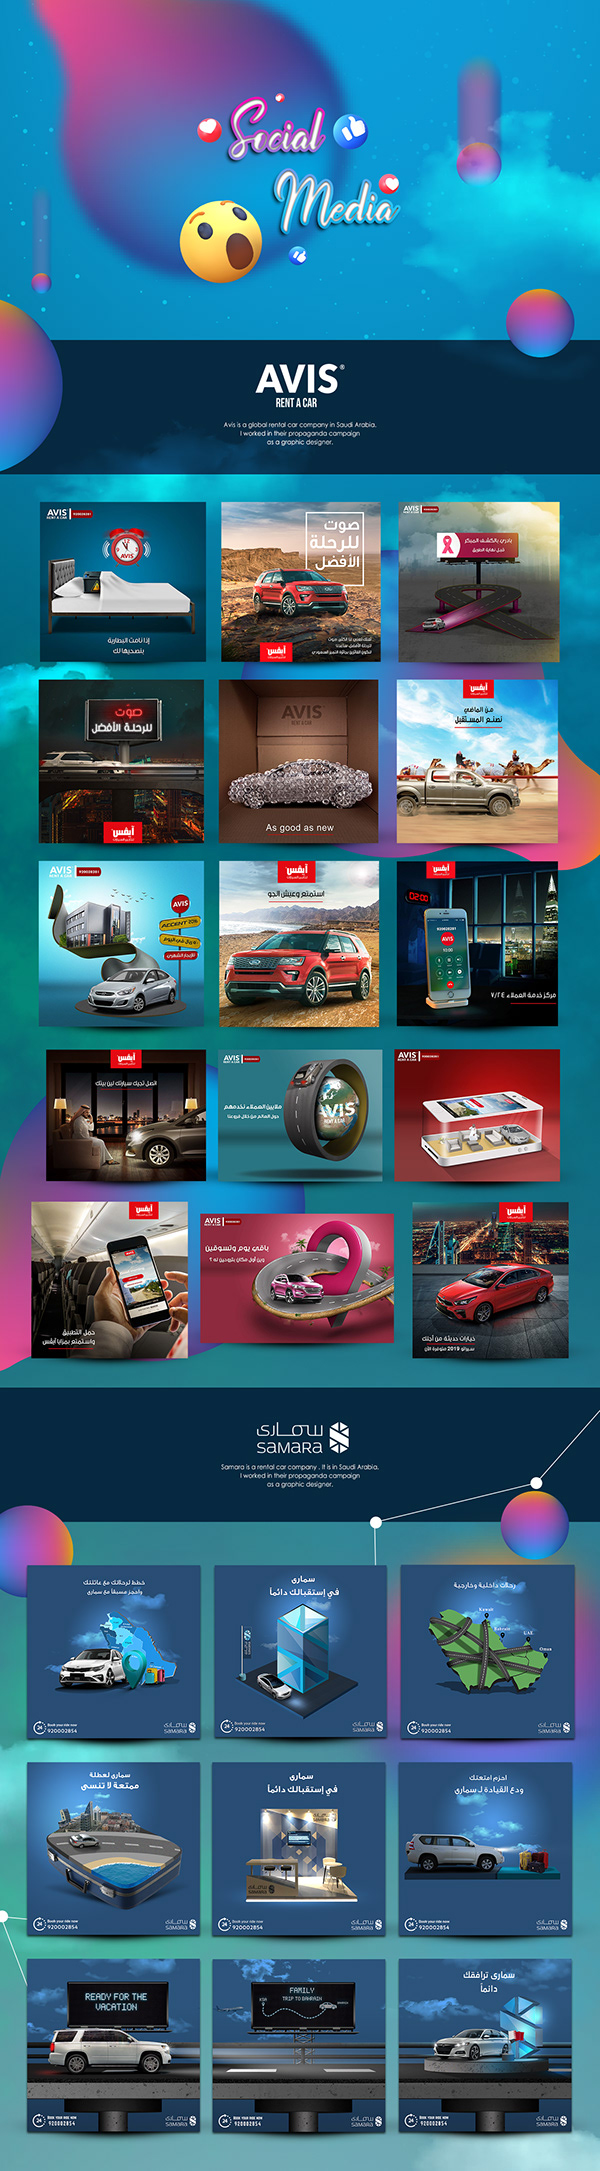 Social Media designs - for Cars Rental campaigns